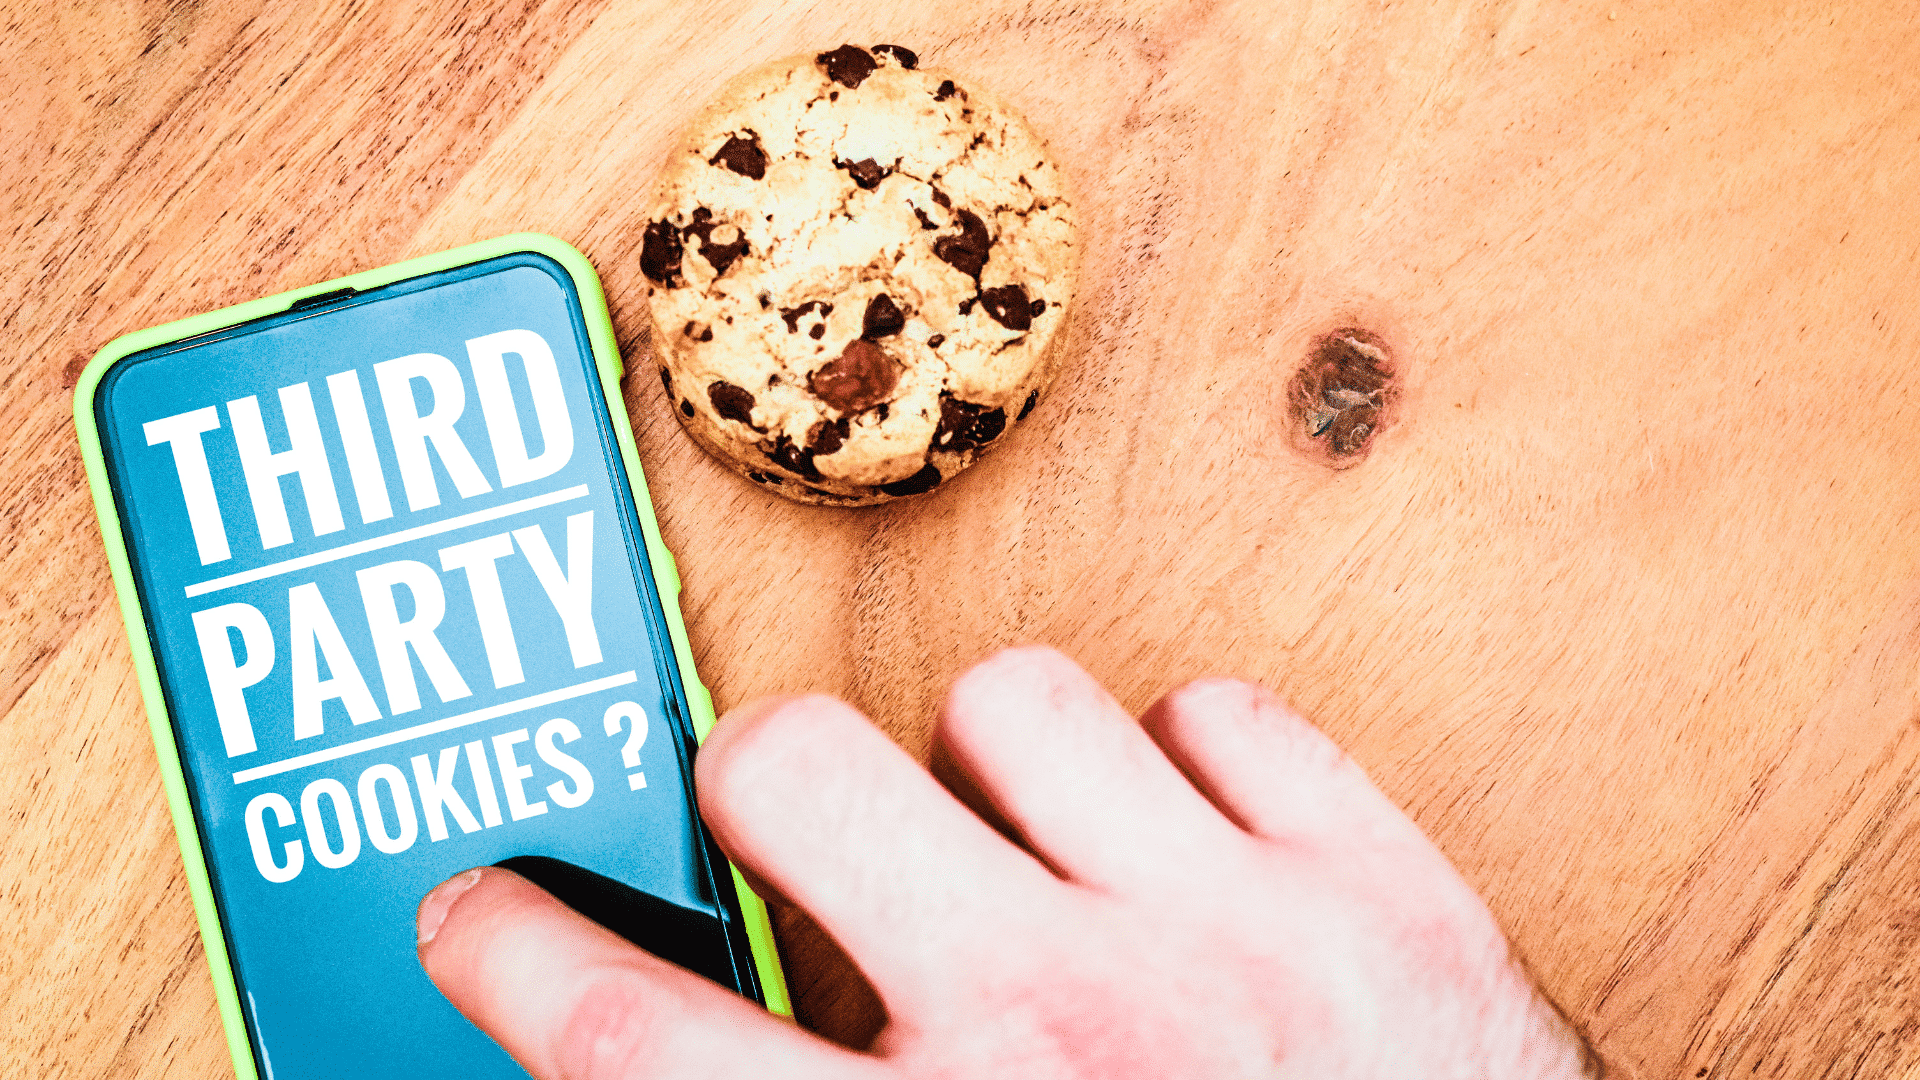 Scritta Third Party Cookies su smartphone